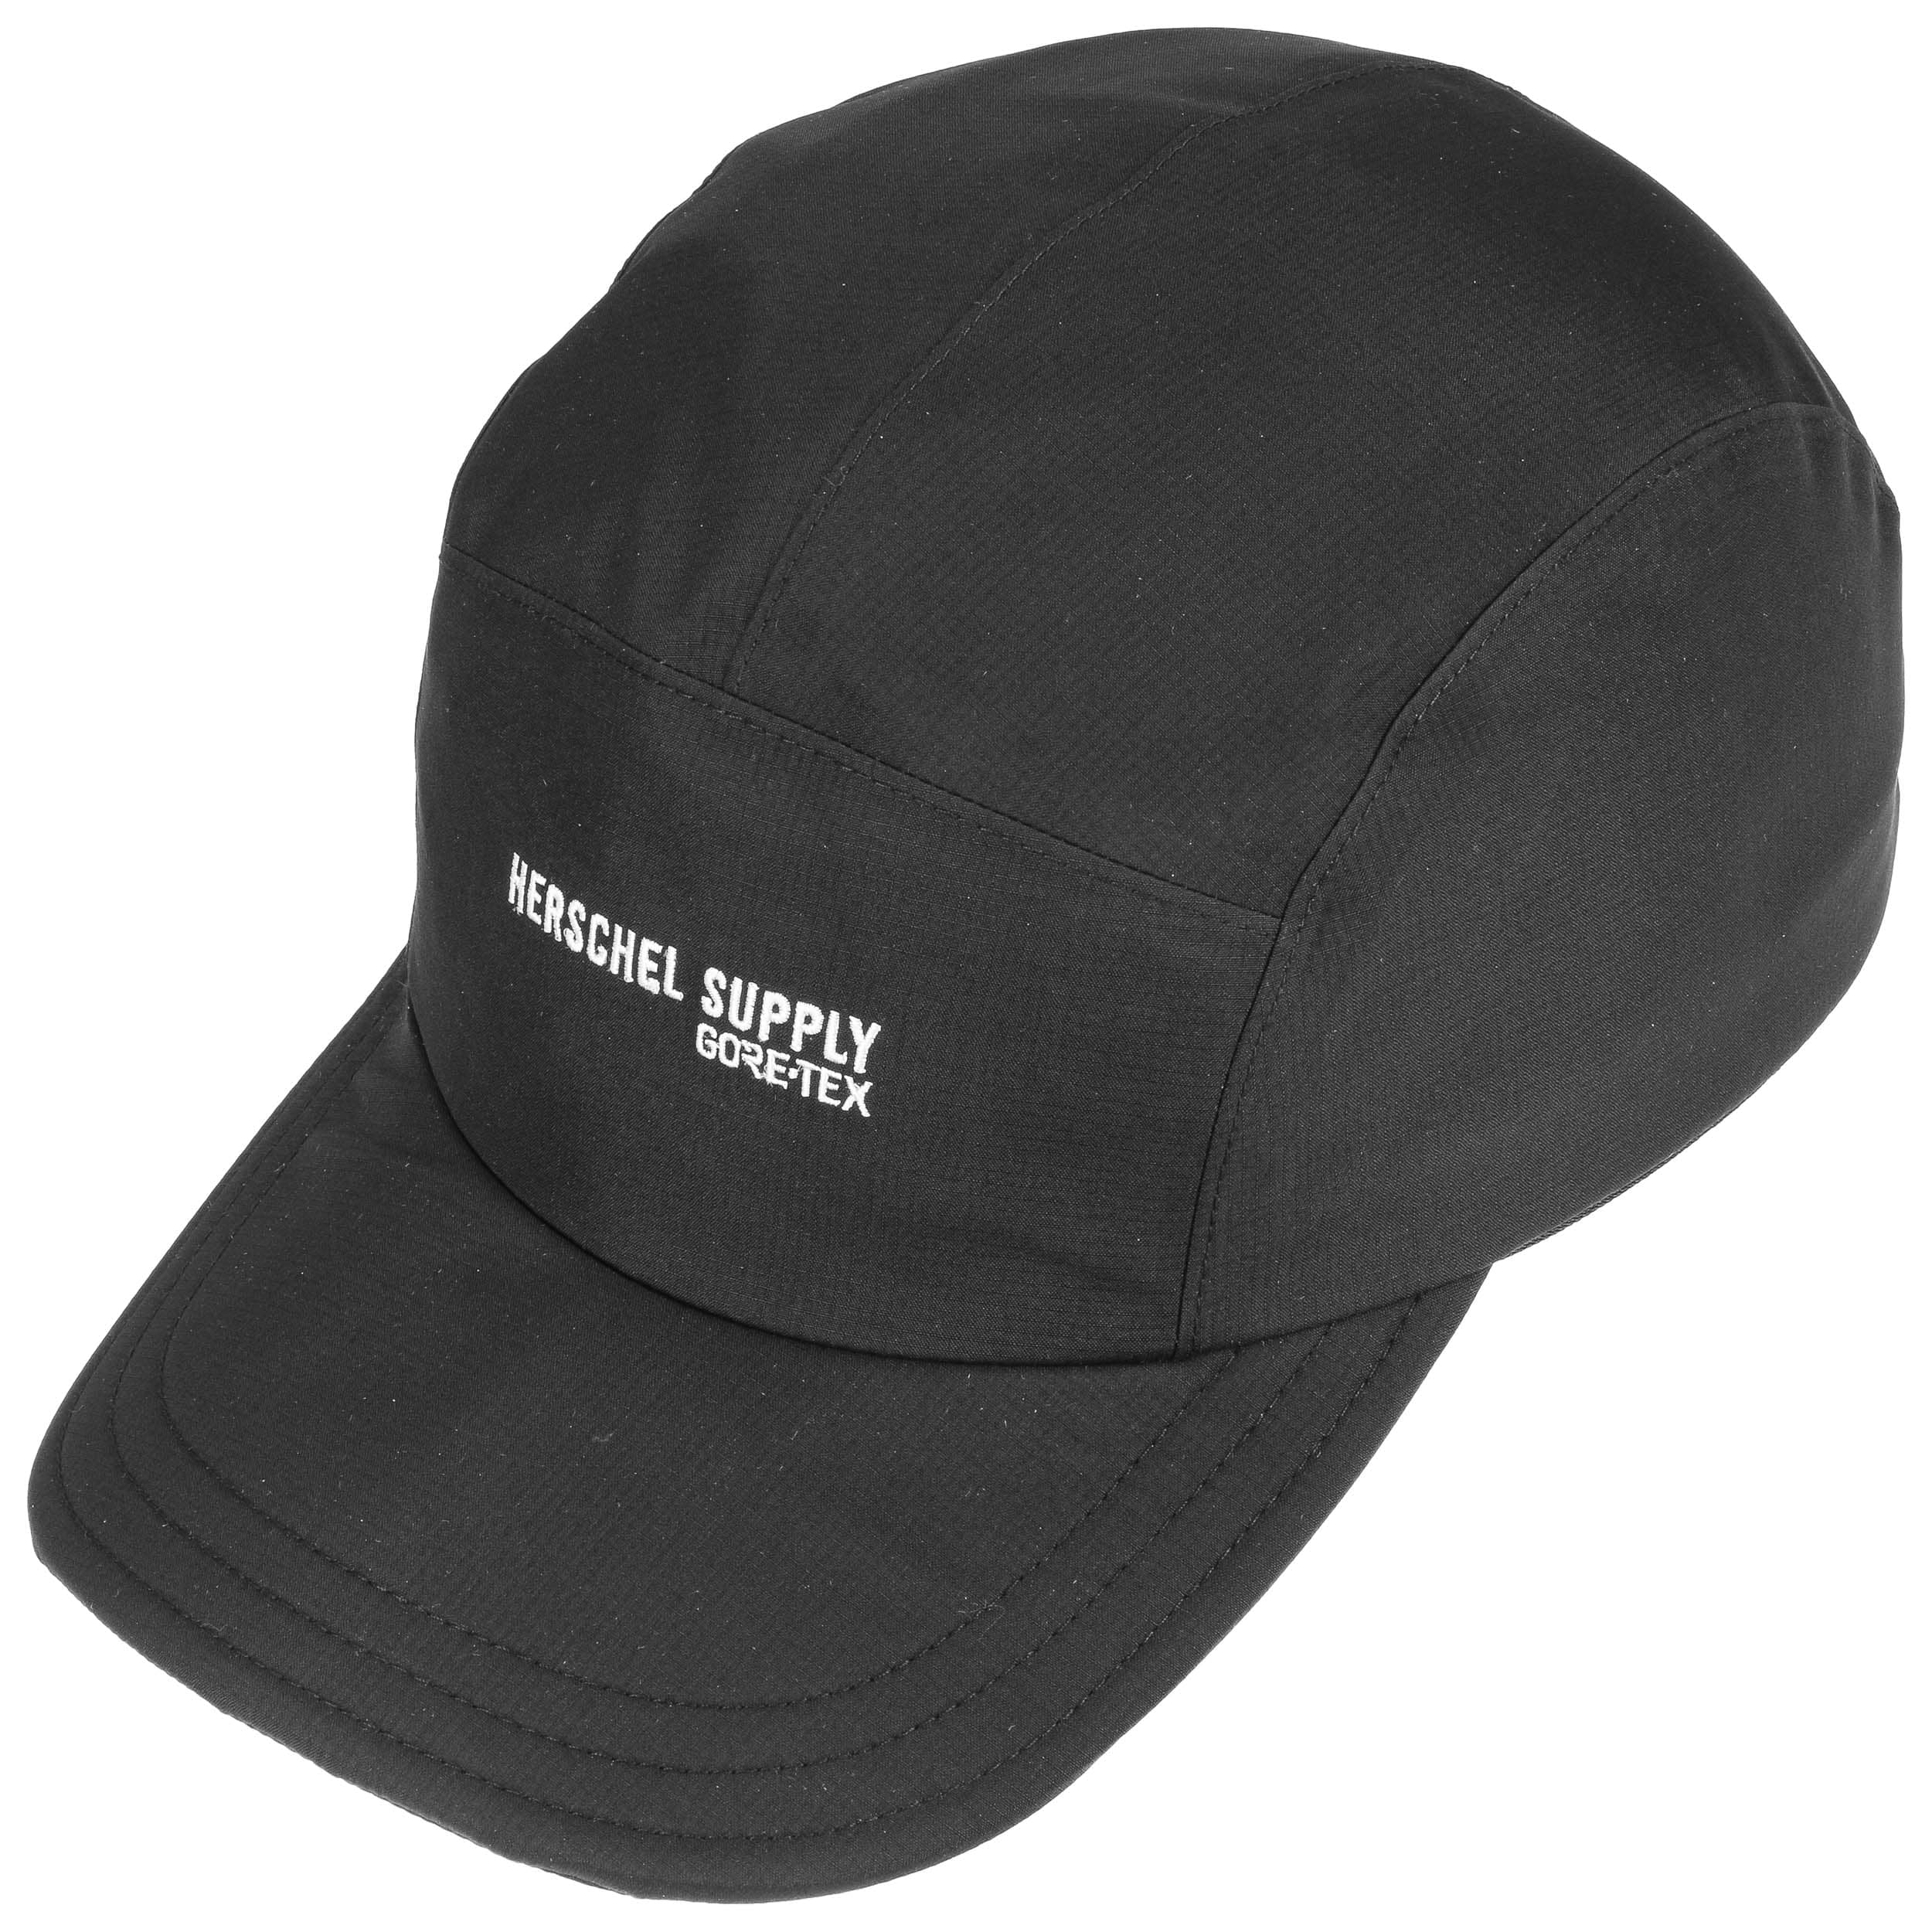 Glendale Gore-Tex Cap by Herschel, EUR 69,95 --> Hats, caps & beanies ...